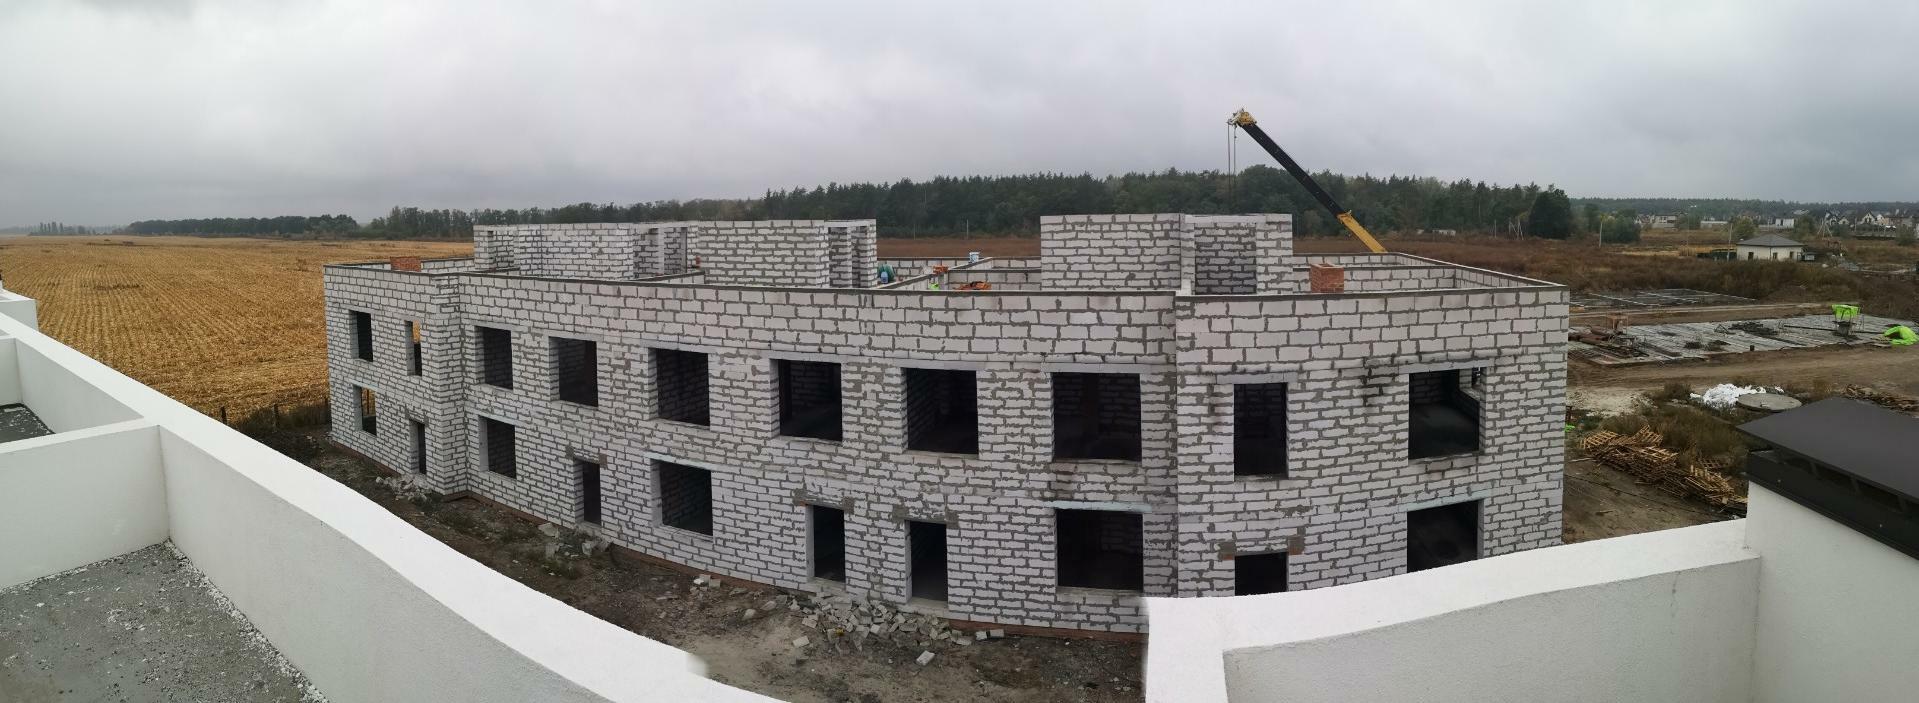 Ход строительства ЖК Кантри Таунхаус, сен, 2019 год